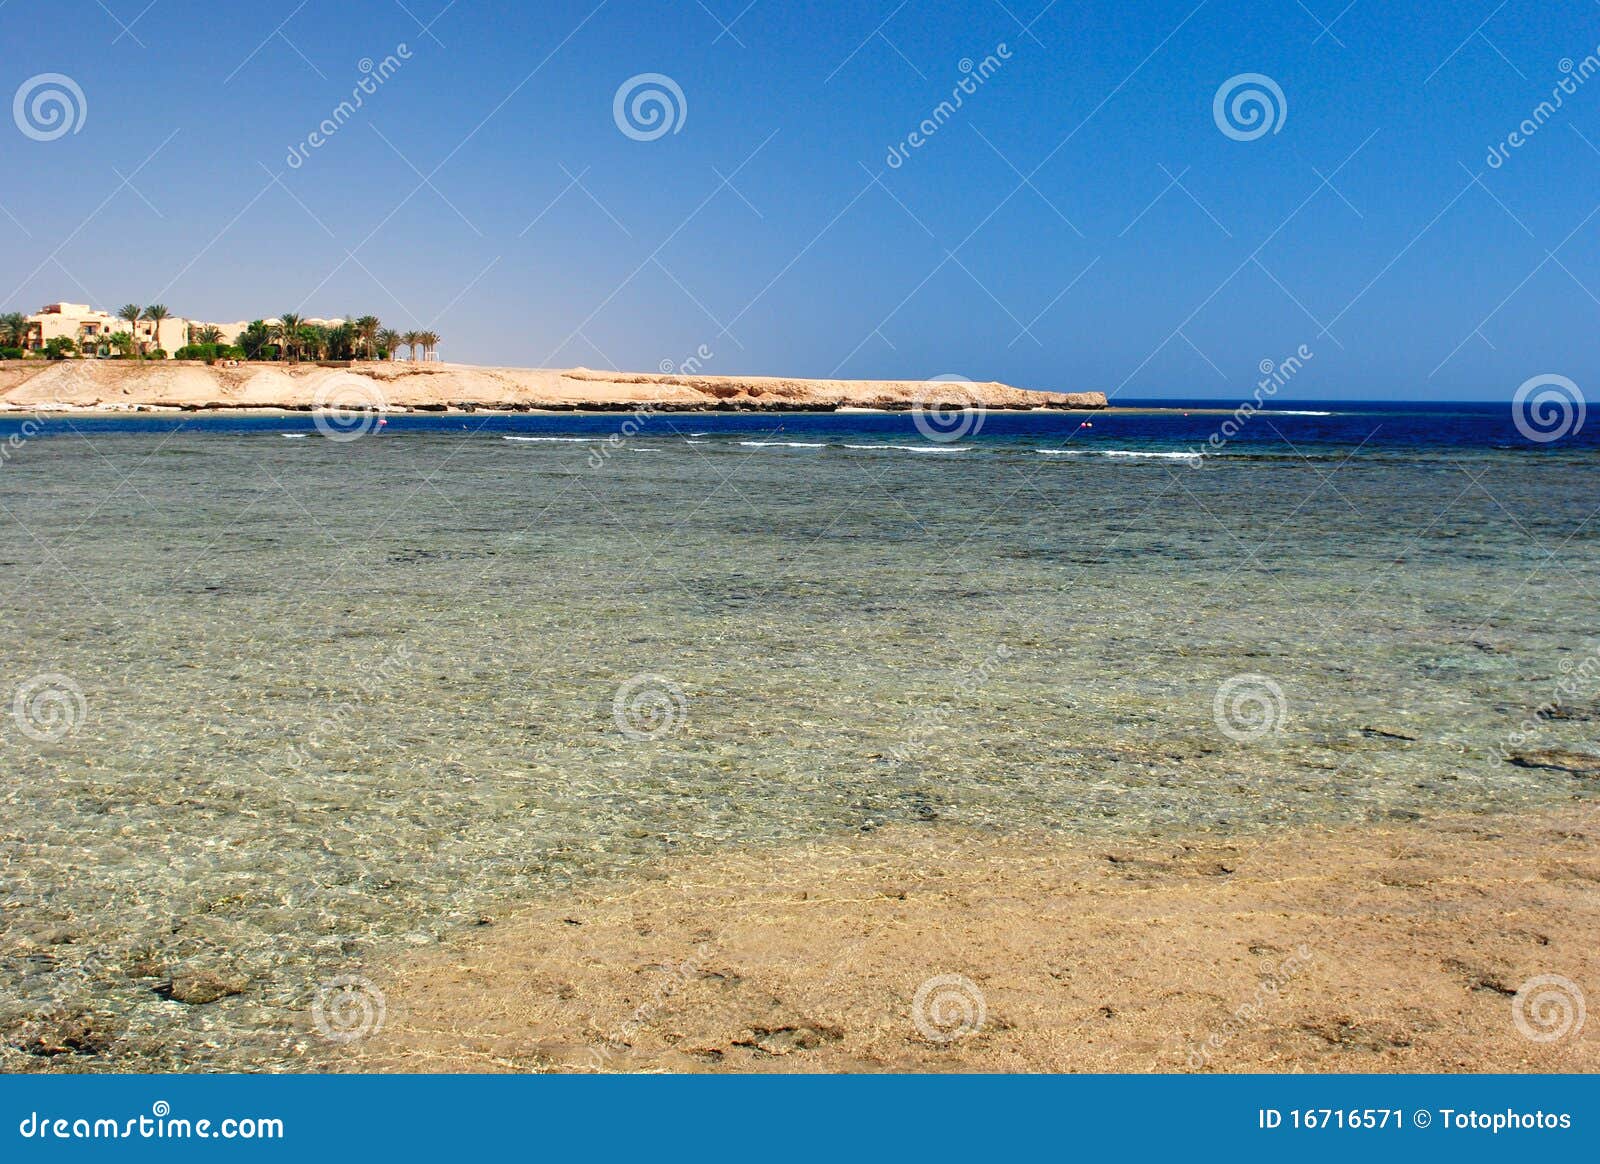 marsa alam beach in egypt